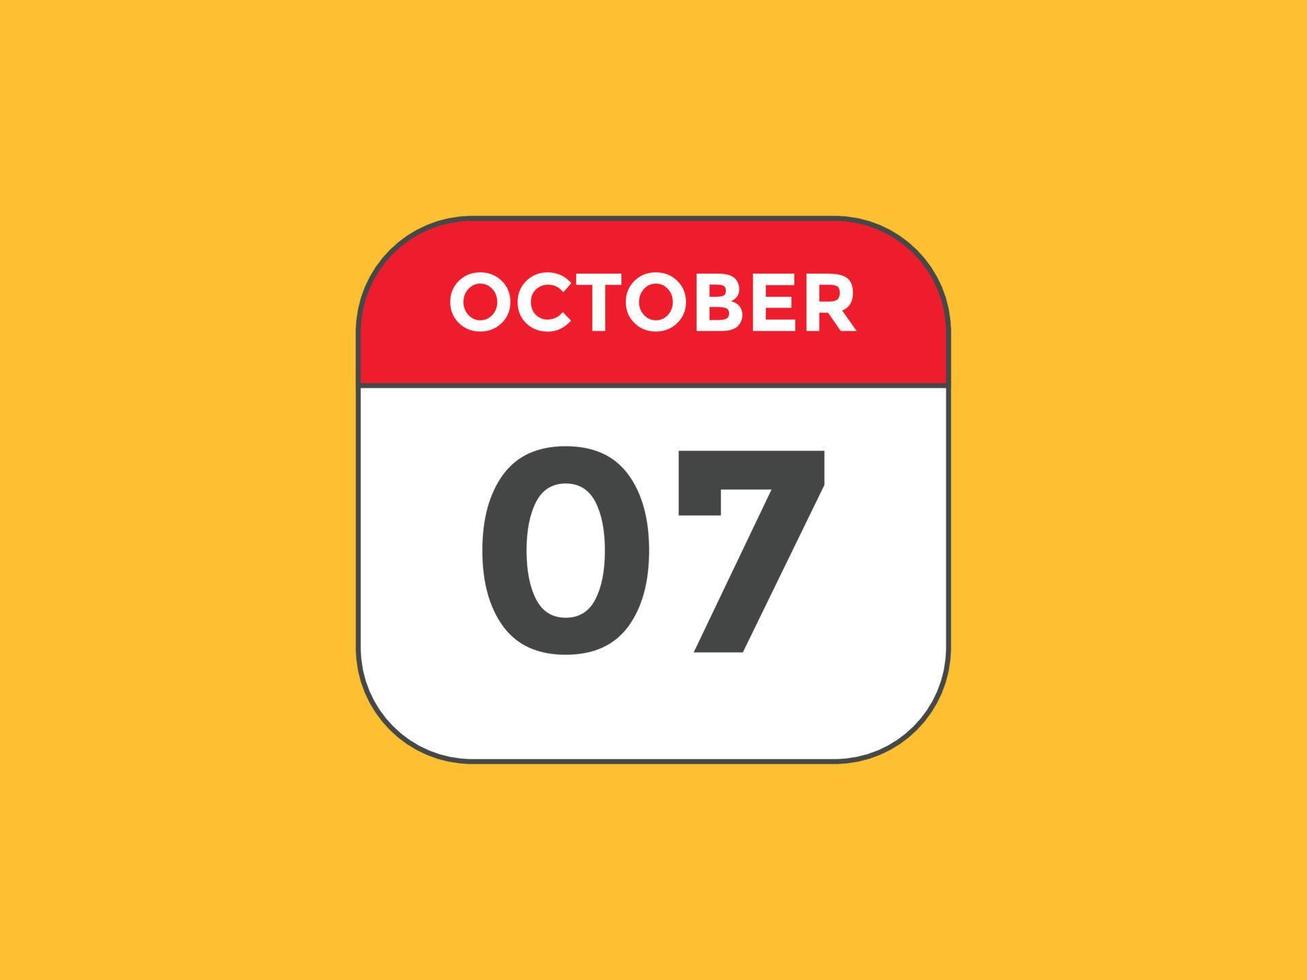 october 7 calendar reminder. 7th october daily calendar icon template. Calendar 7th october icon Design template. Vector illustration